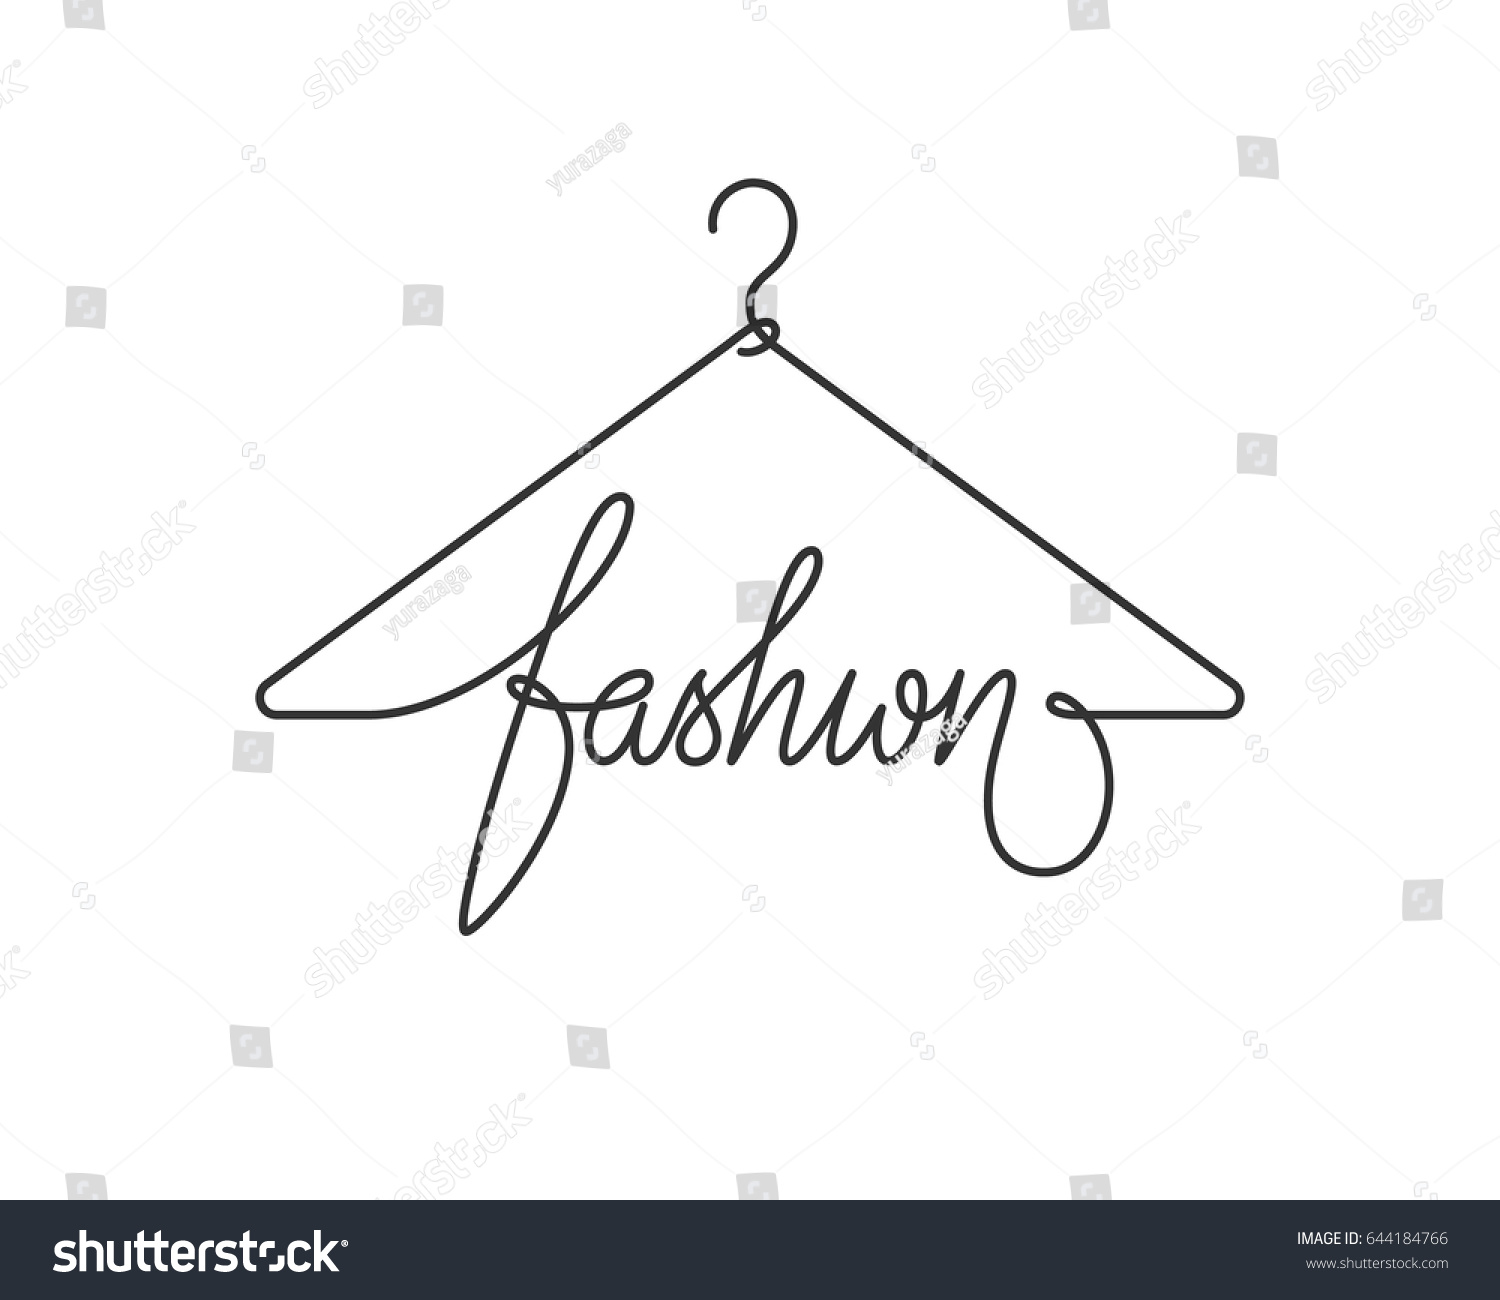 27,918 Women fashion store logo Images, Stock Photos & Vectors ...